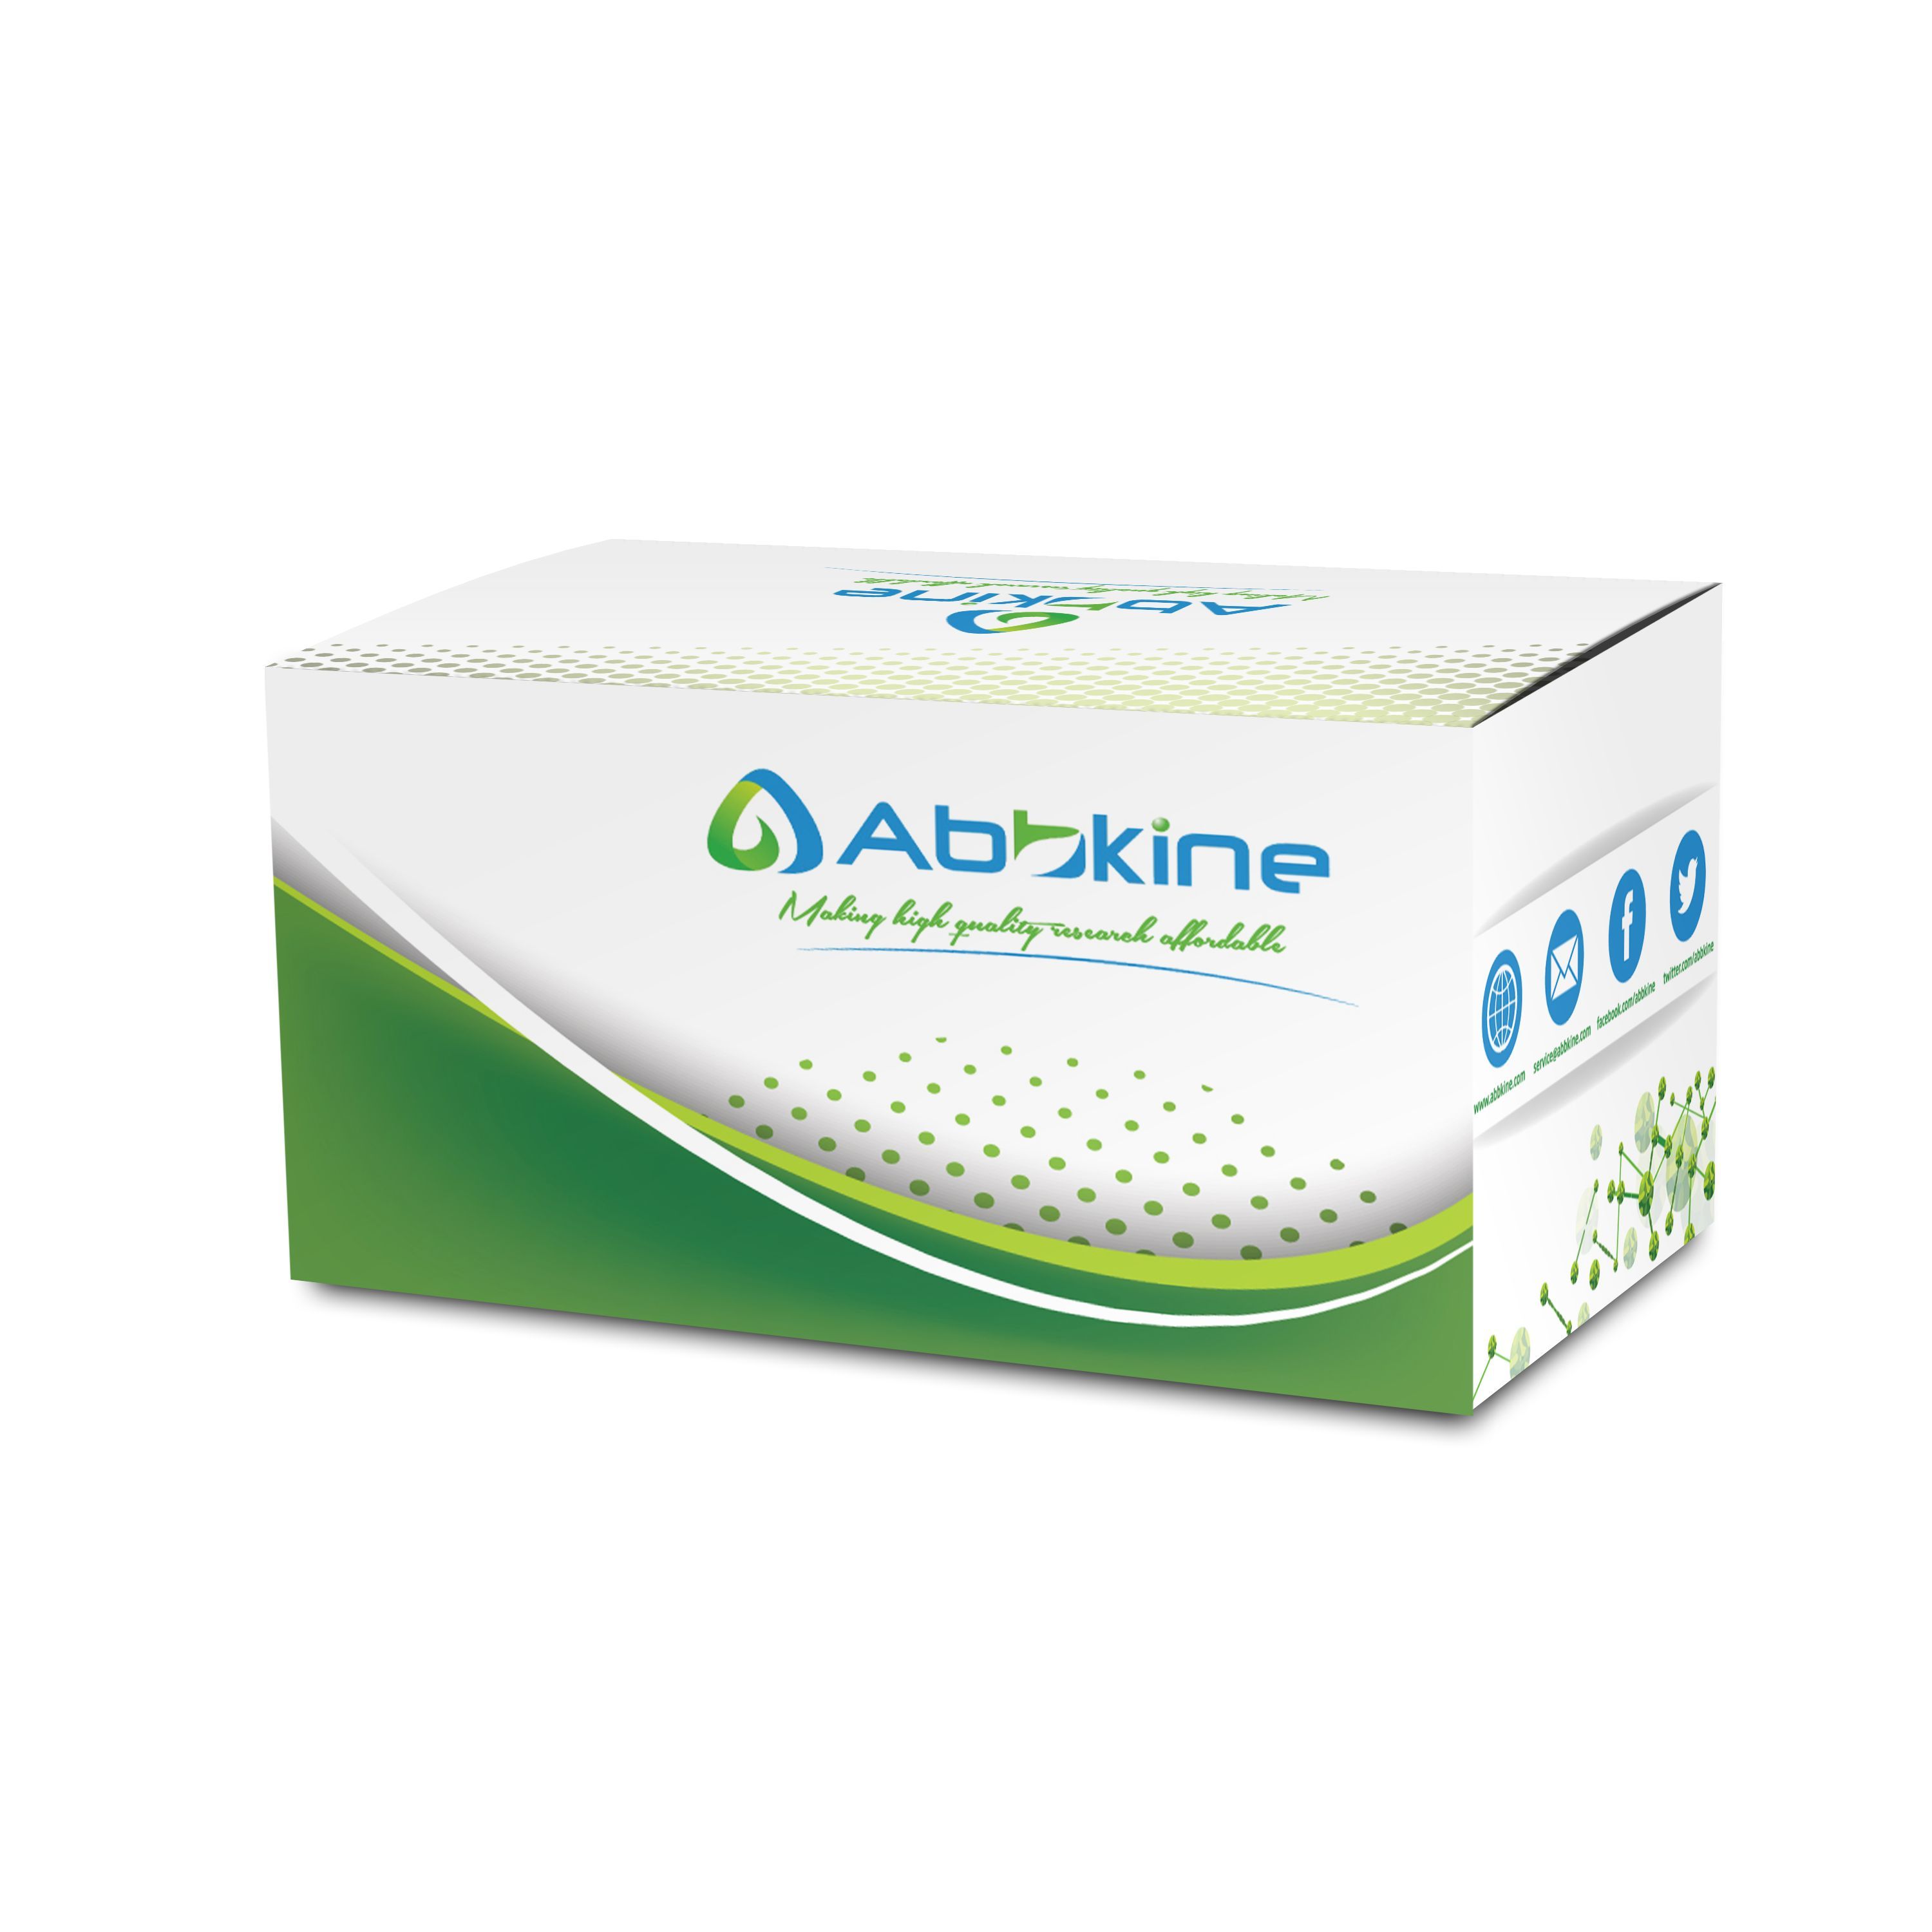 ExKine™ 膜蛋白与胞浆蛋白提取试剂盒/ExKine™ Membrane and Cytoplasmic Protein Extraction kit